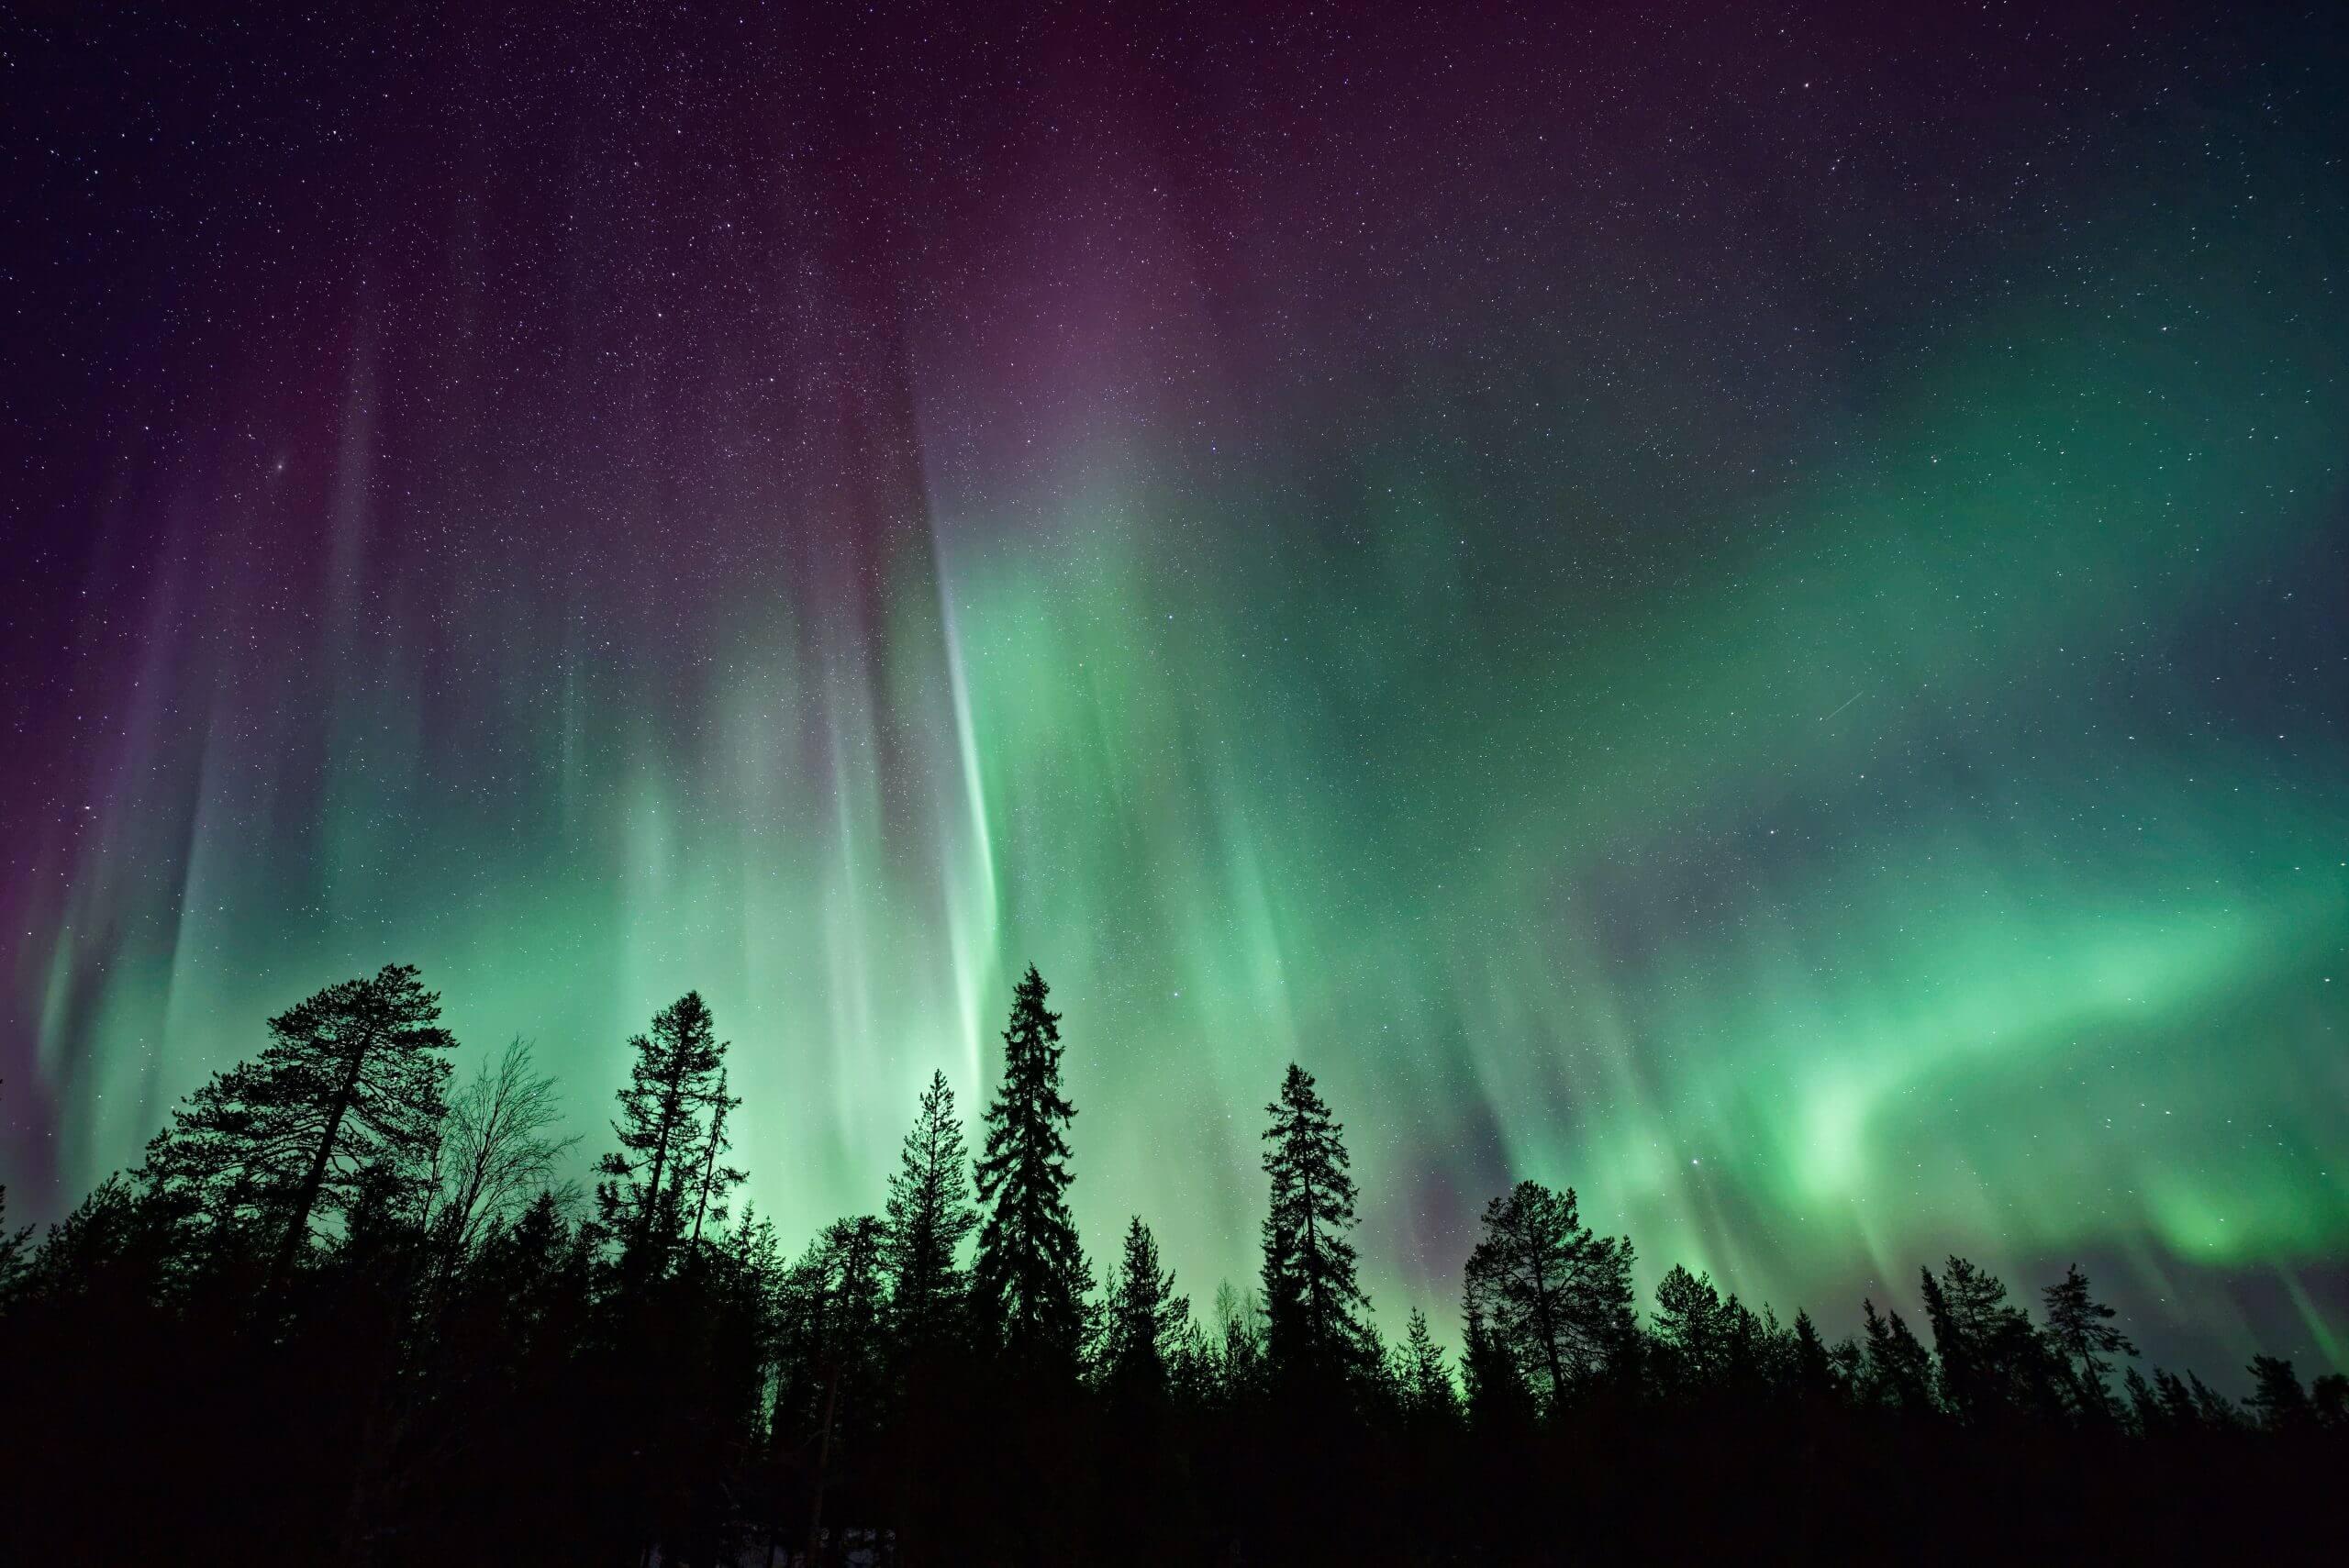 Northern lights in the Alaskan sky